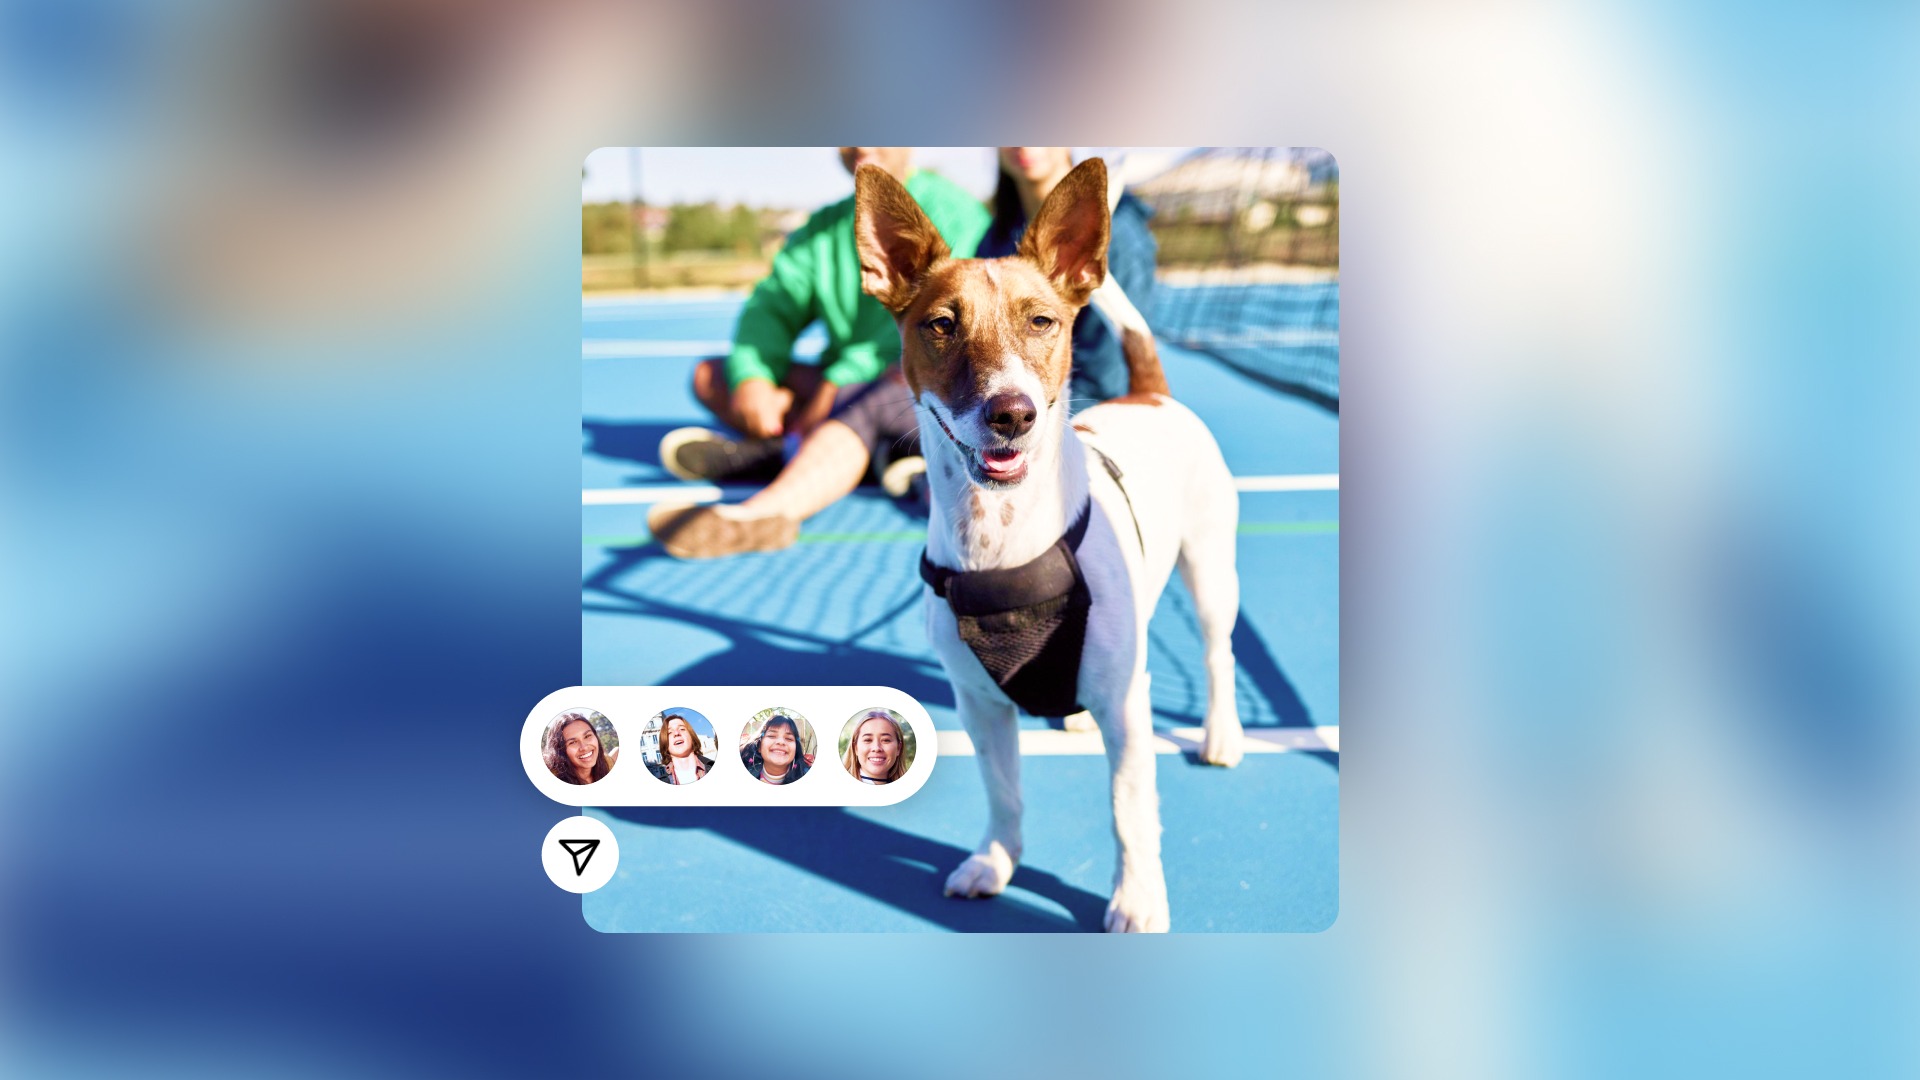 Instagram เพิ่ม 7 ฟีเจอร์ใหม่ที่จะทำให้การส่งข้อความสนุกมากขึ้น